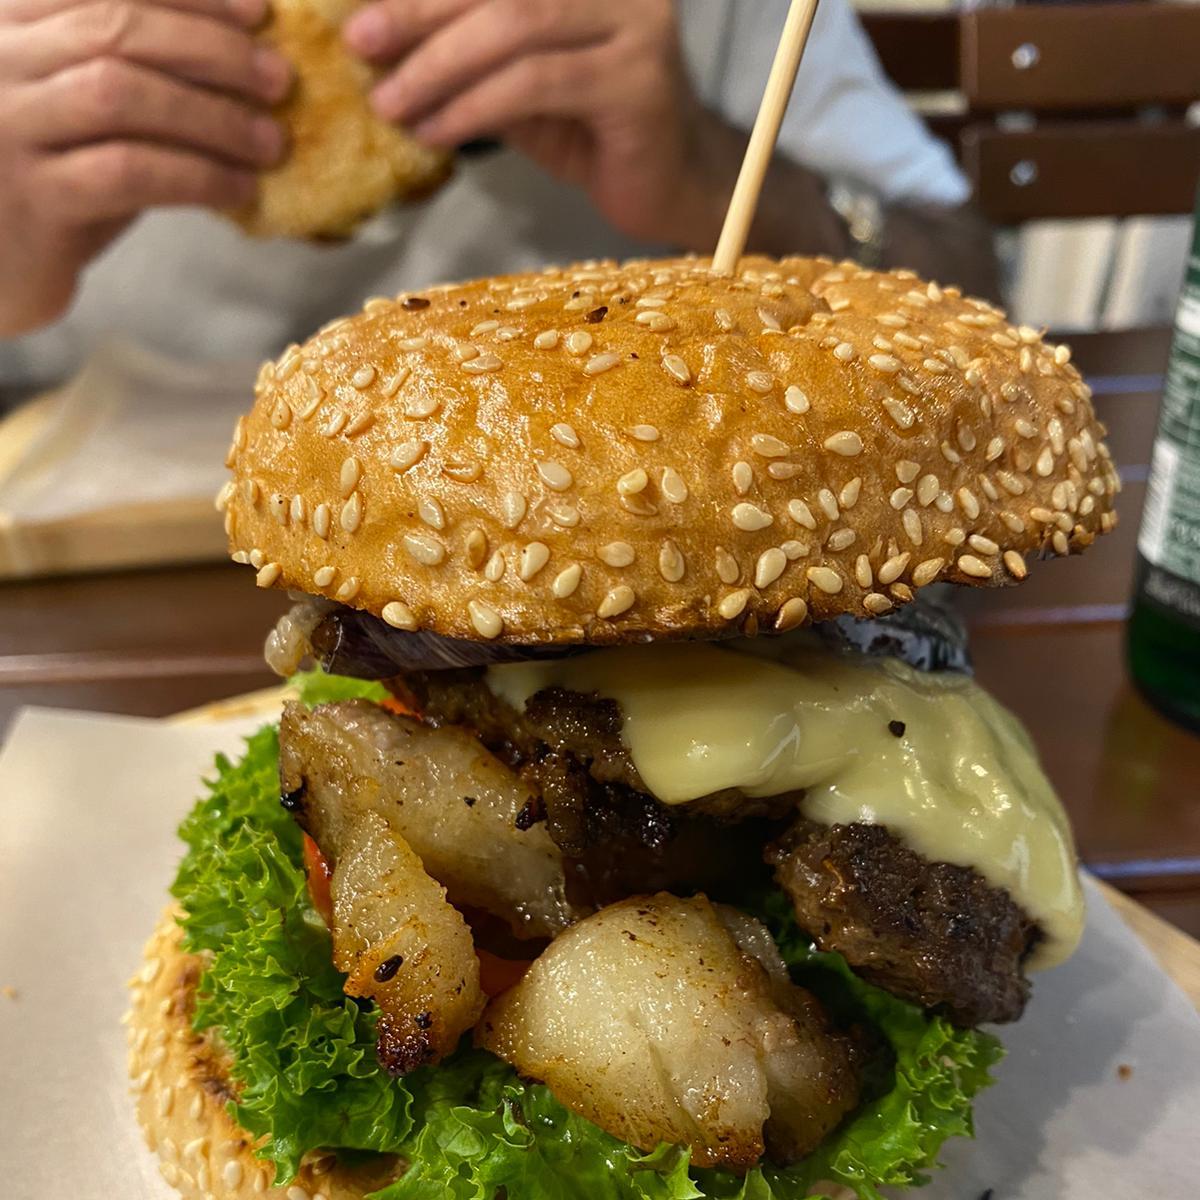 Restaurant "Louy’s Burger" in Berlin